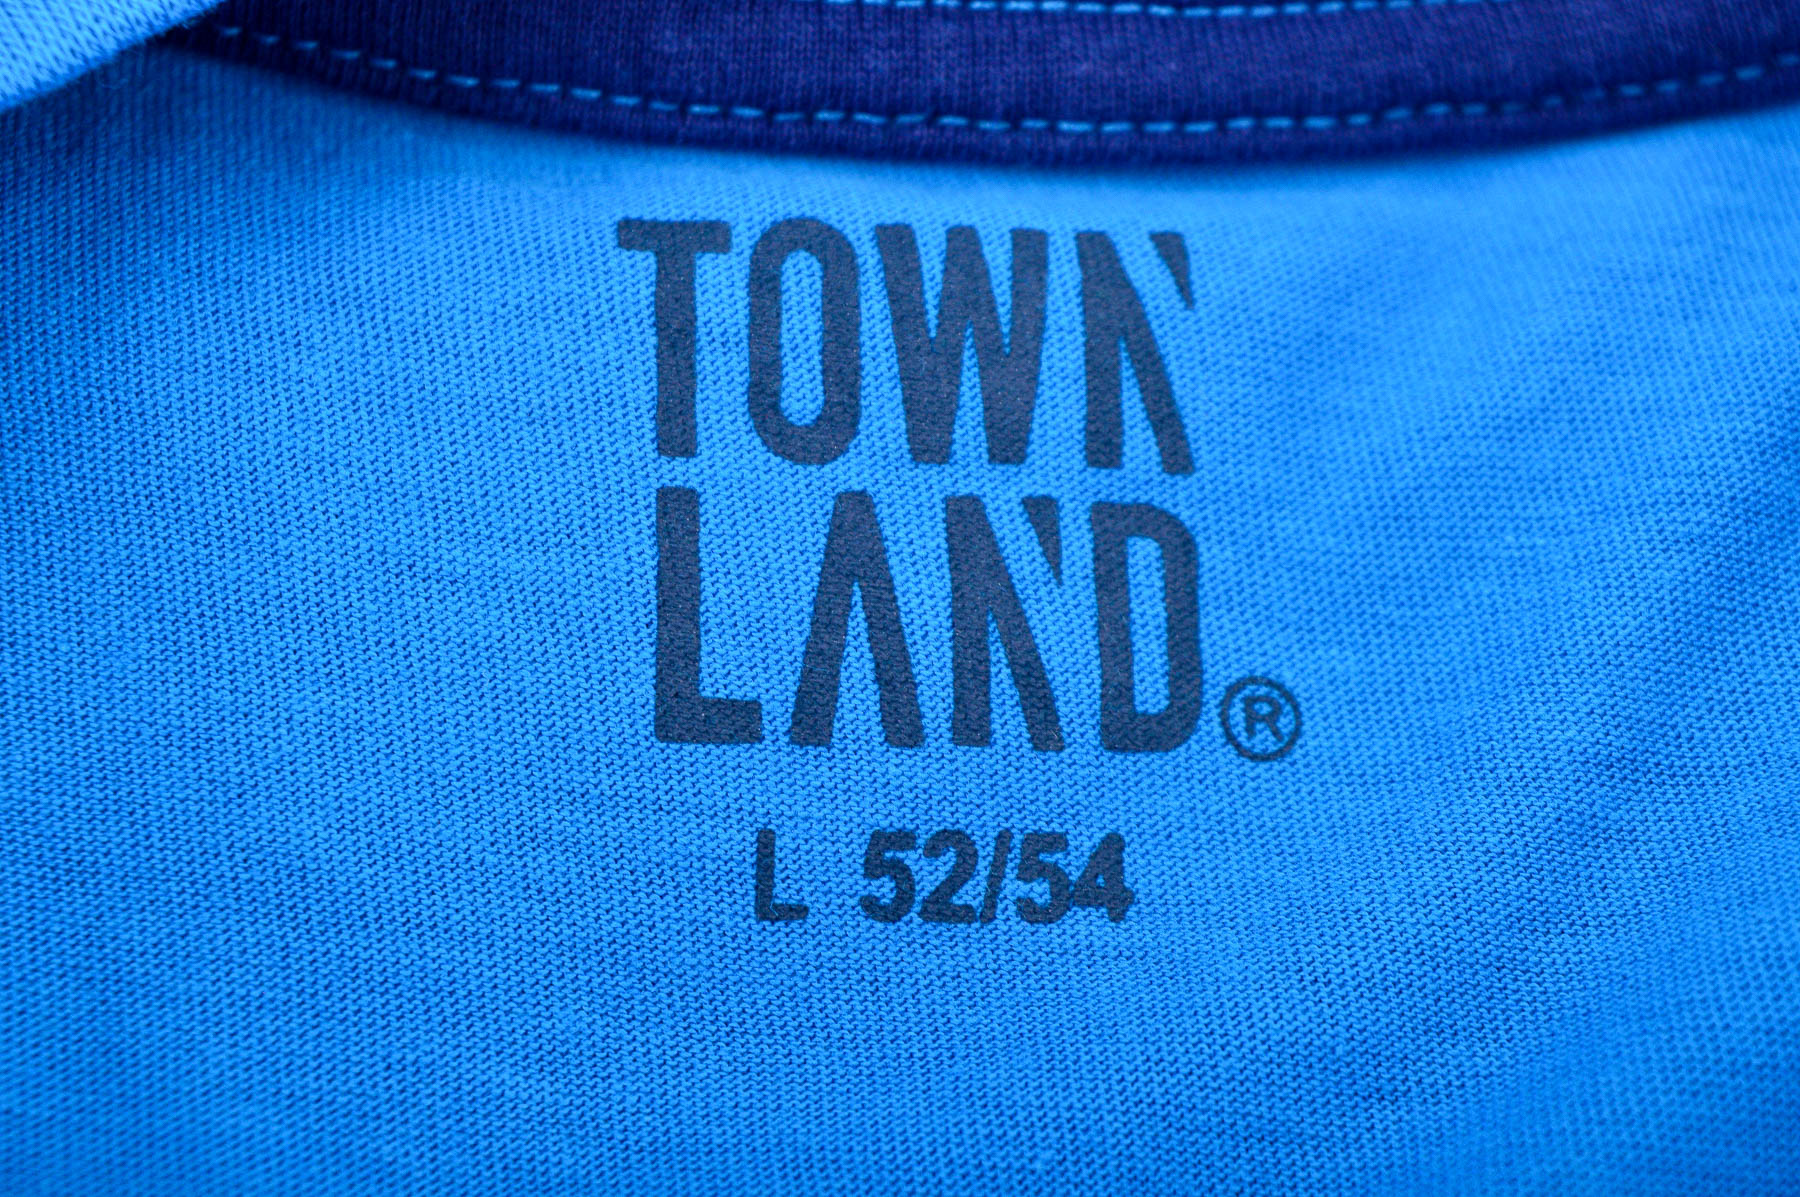 Men's T-shirt - Town land - 3